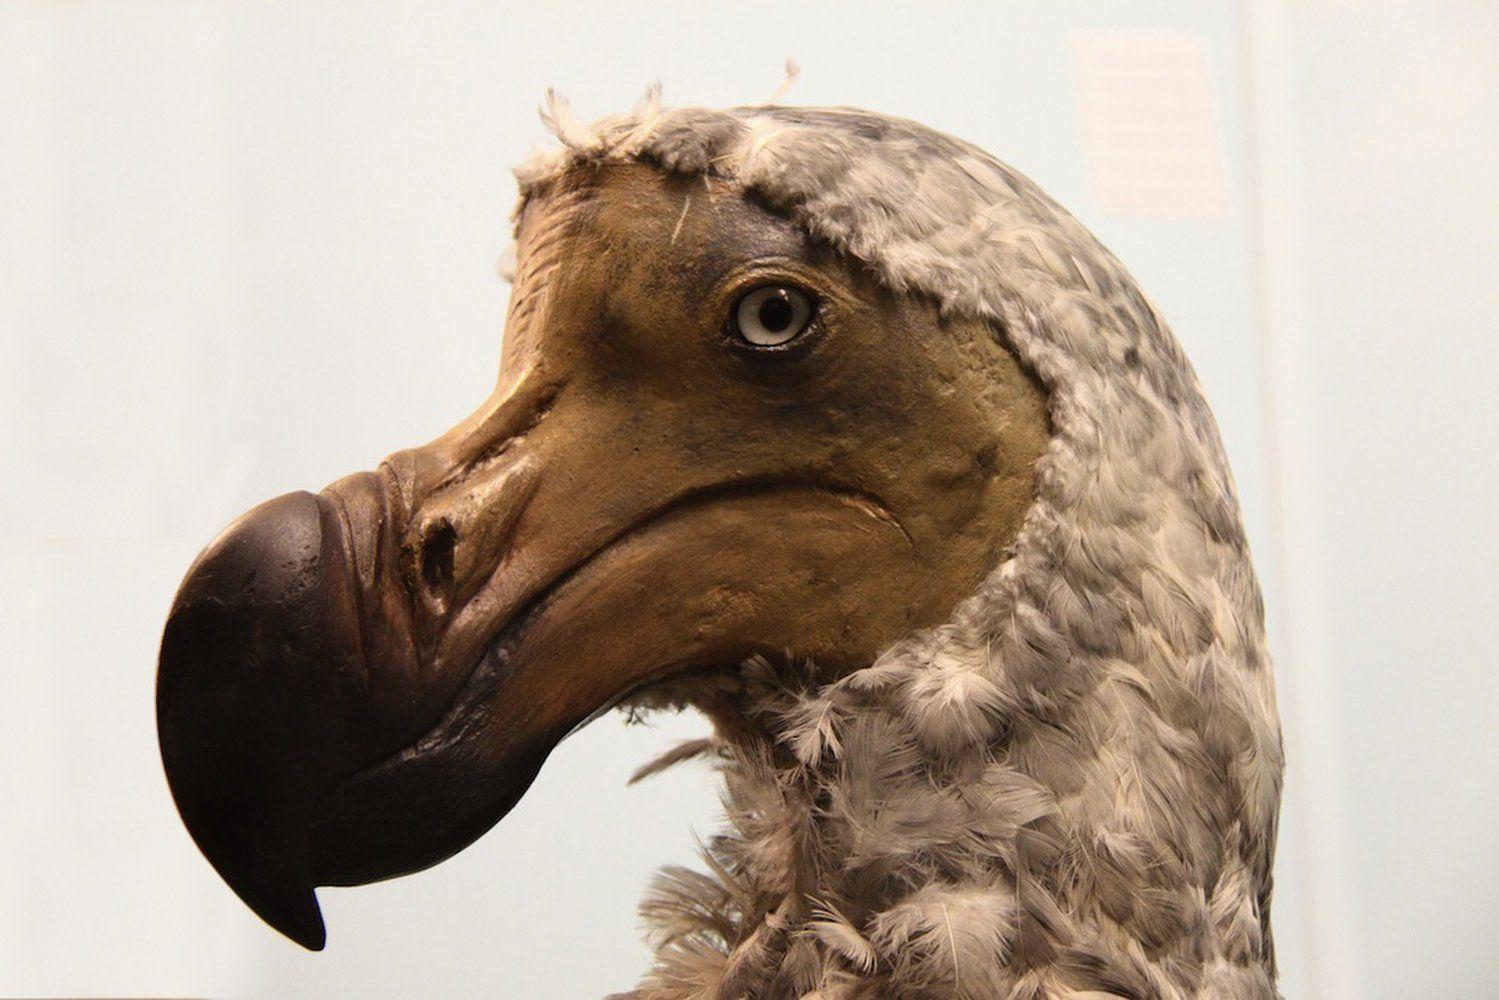 In Photo: The Famous Flightless Dodo Bird